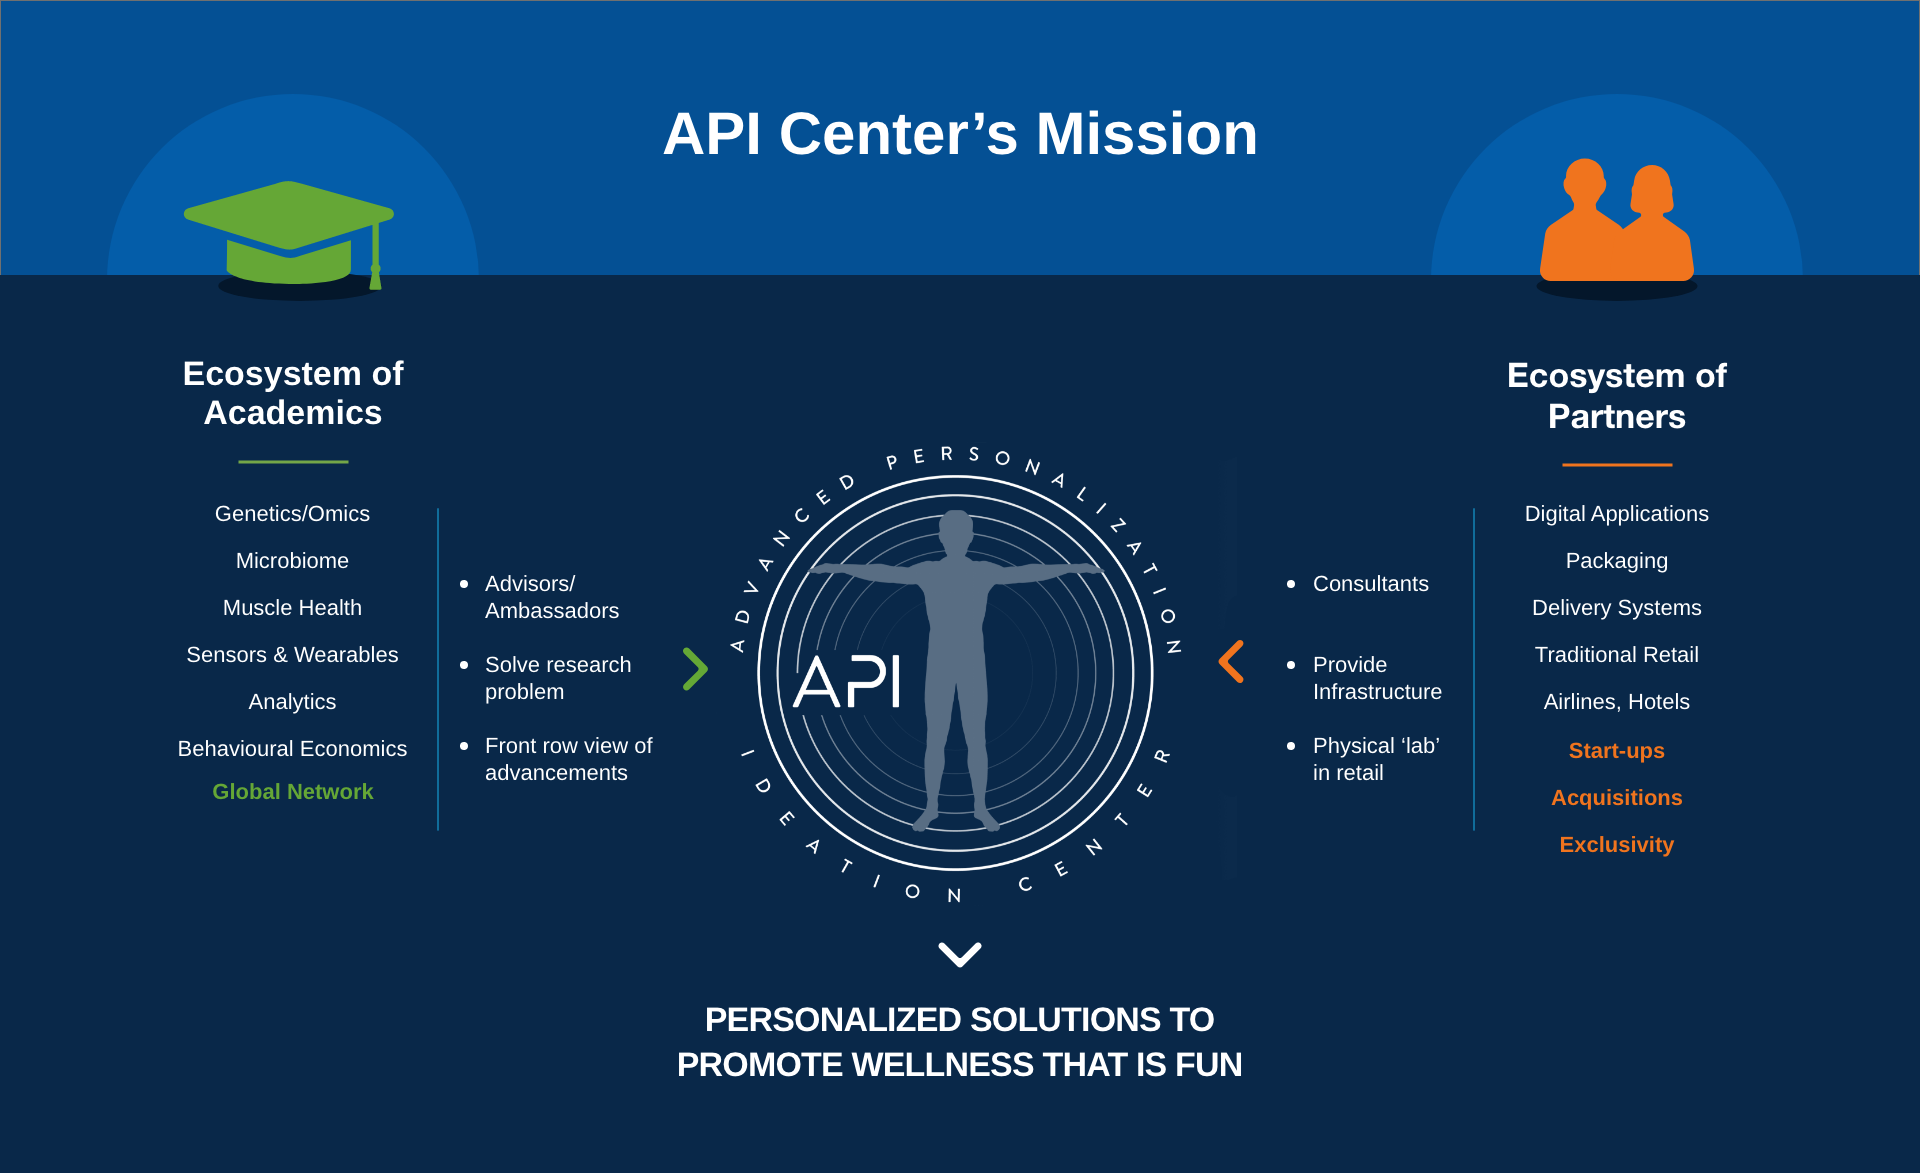 API's Center's Mission Image 